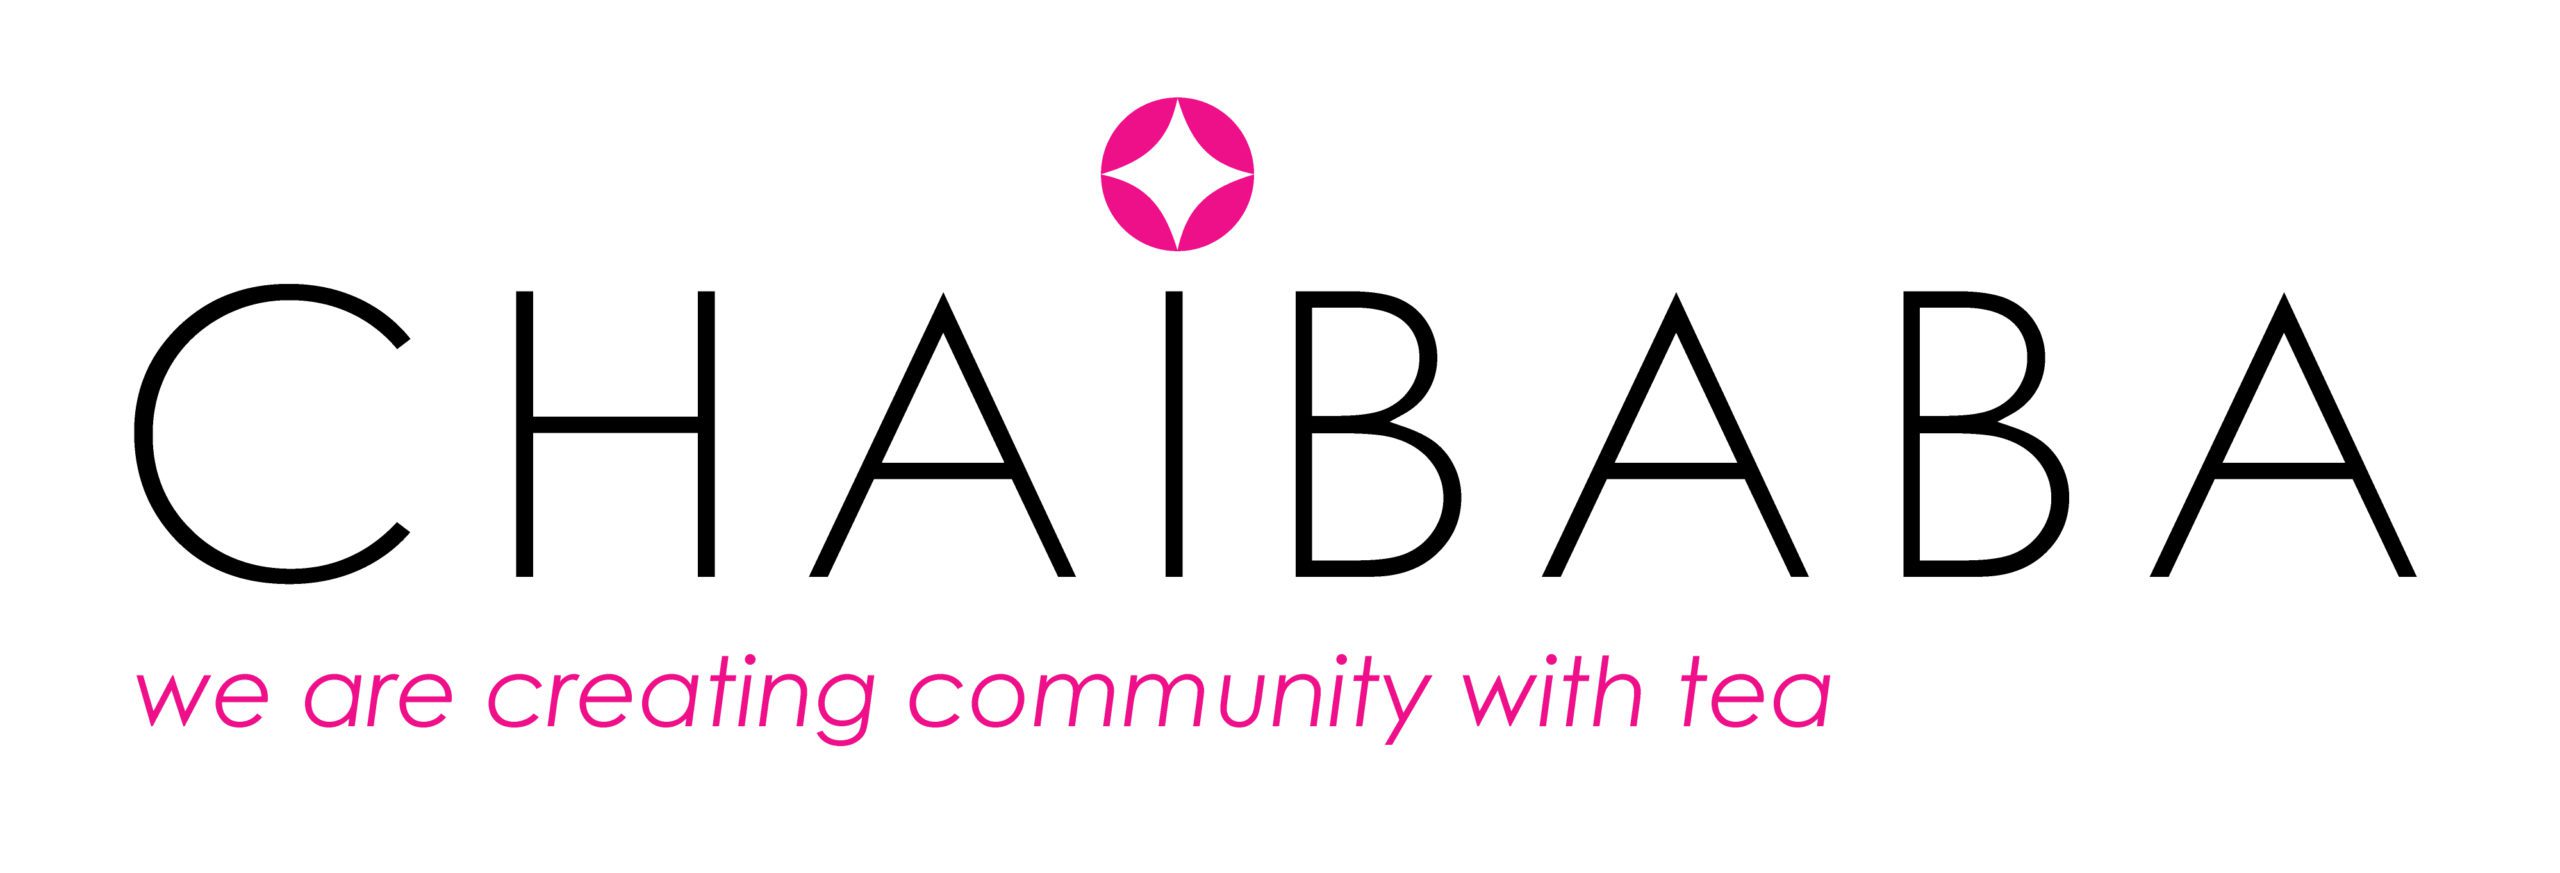 Chaibaba logo